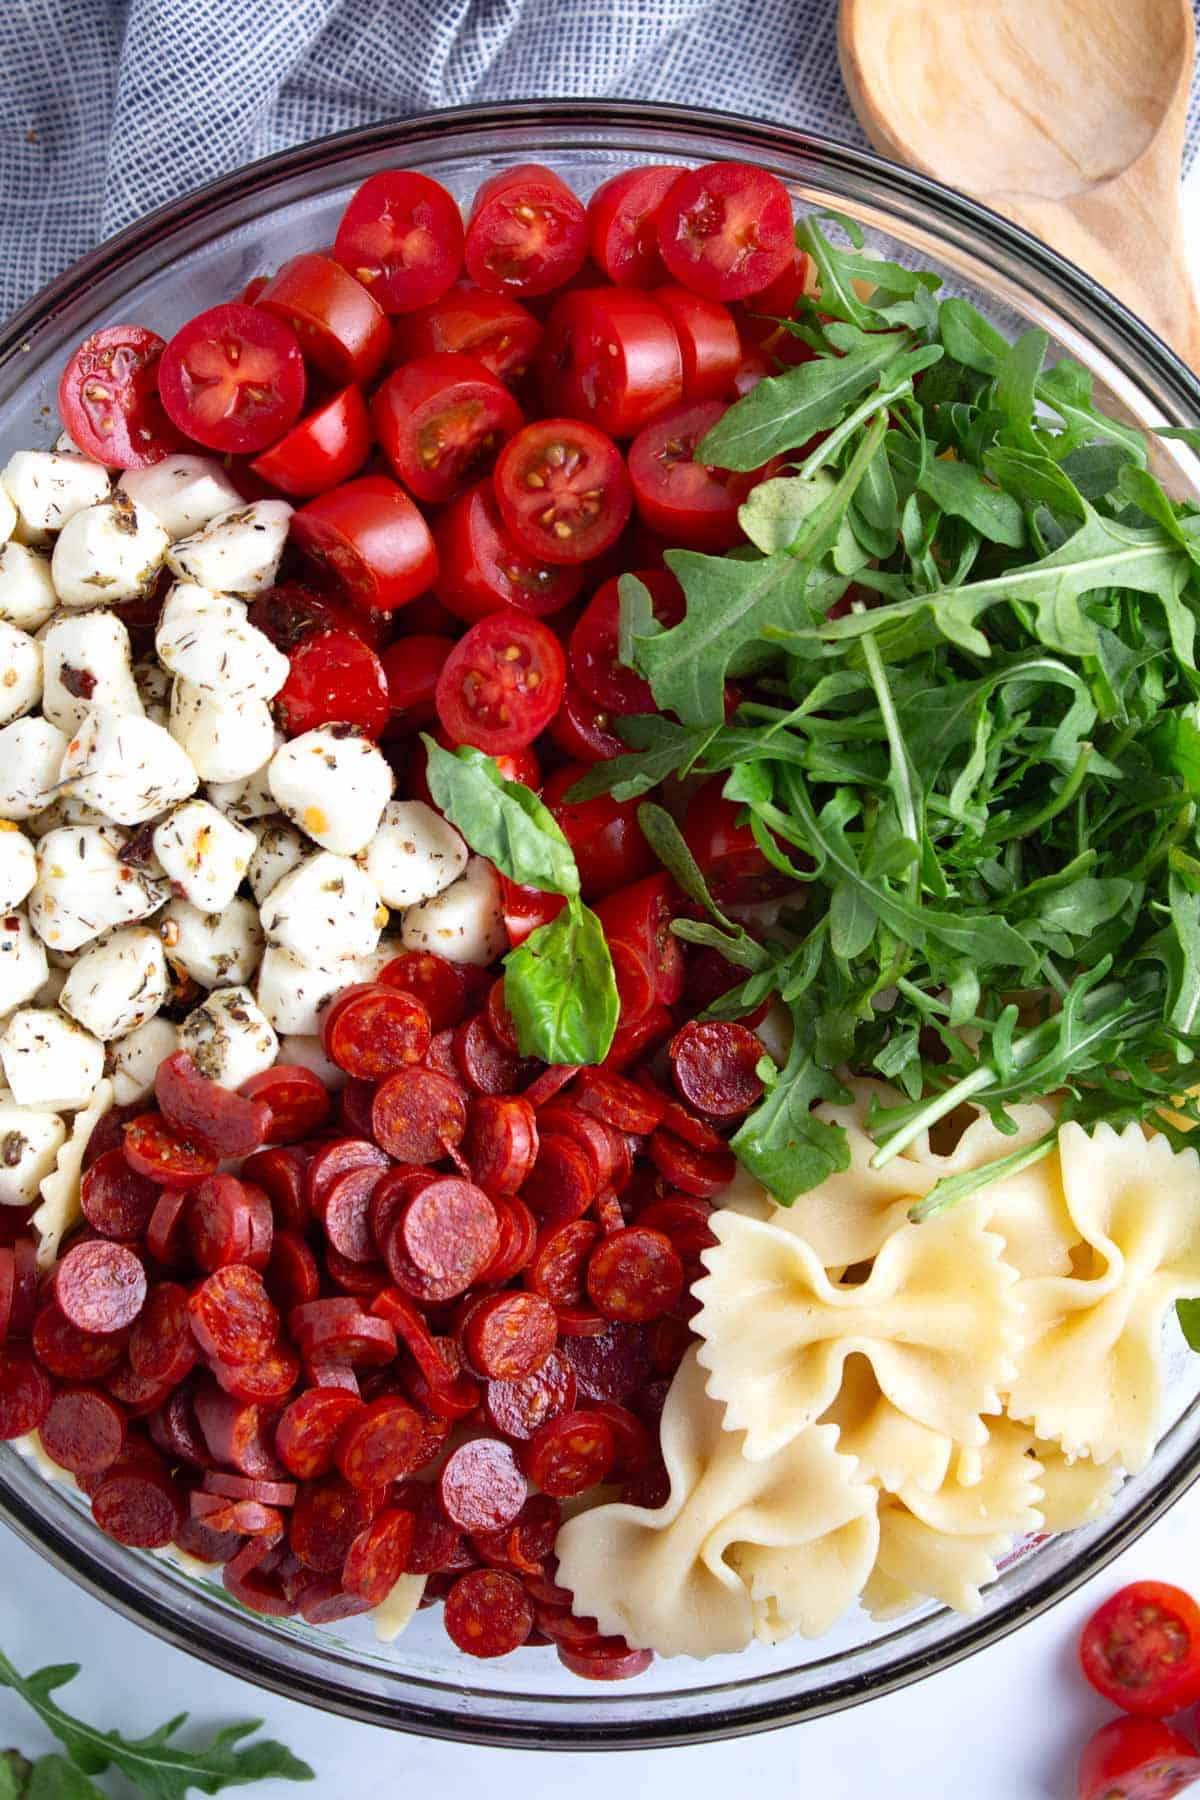 Piles of pasta salad ingredients in bowl before tossing in hot honey vinaigrette.